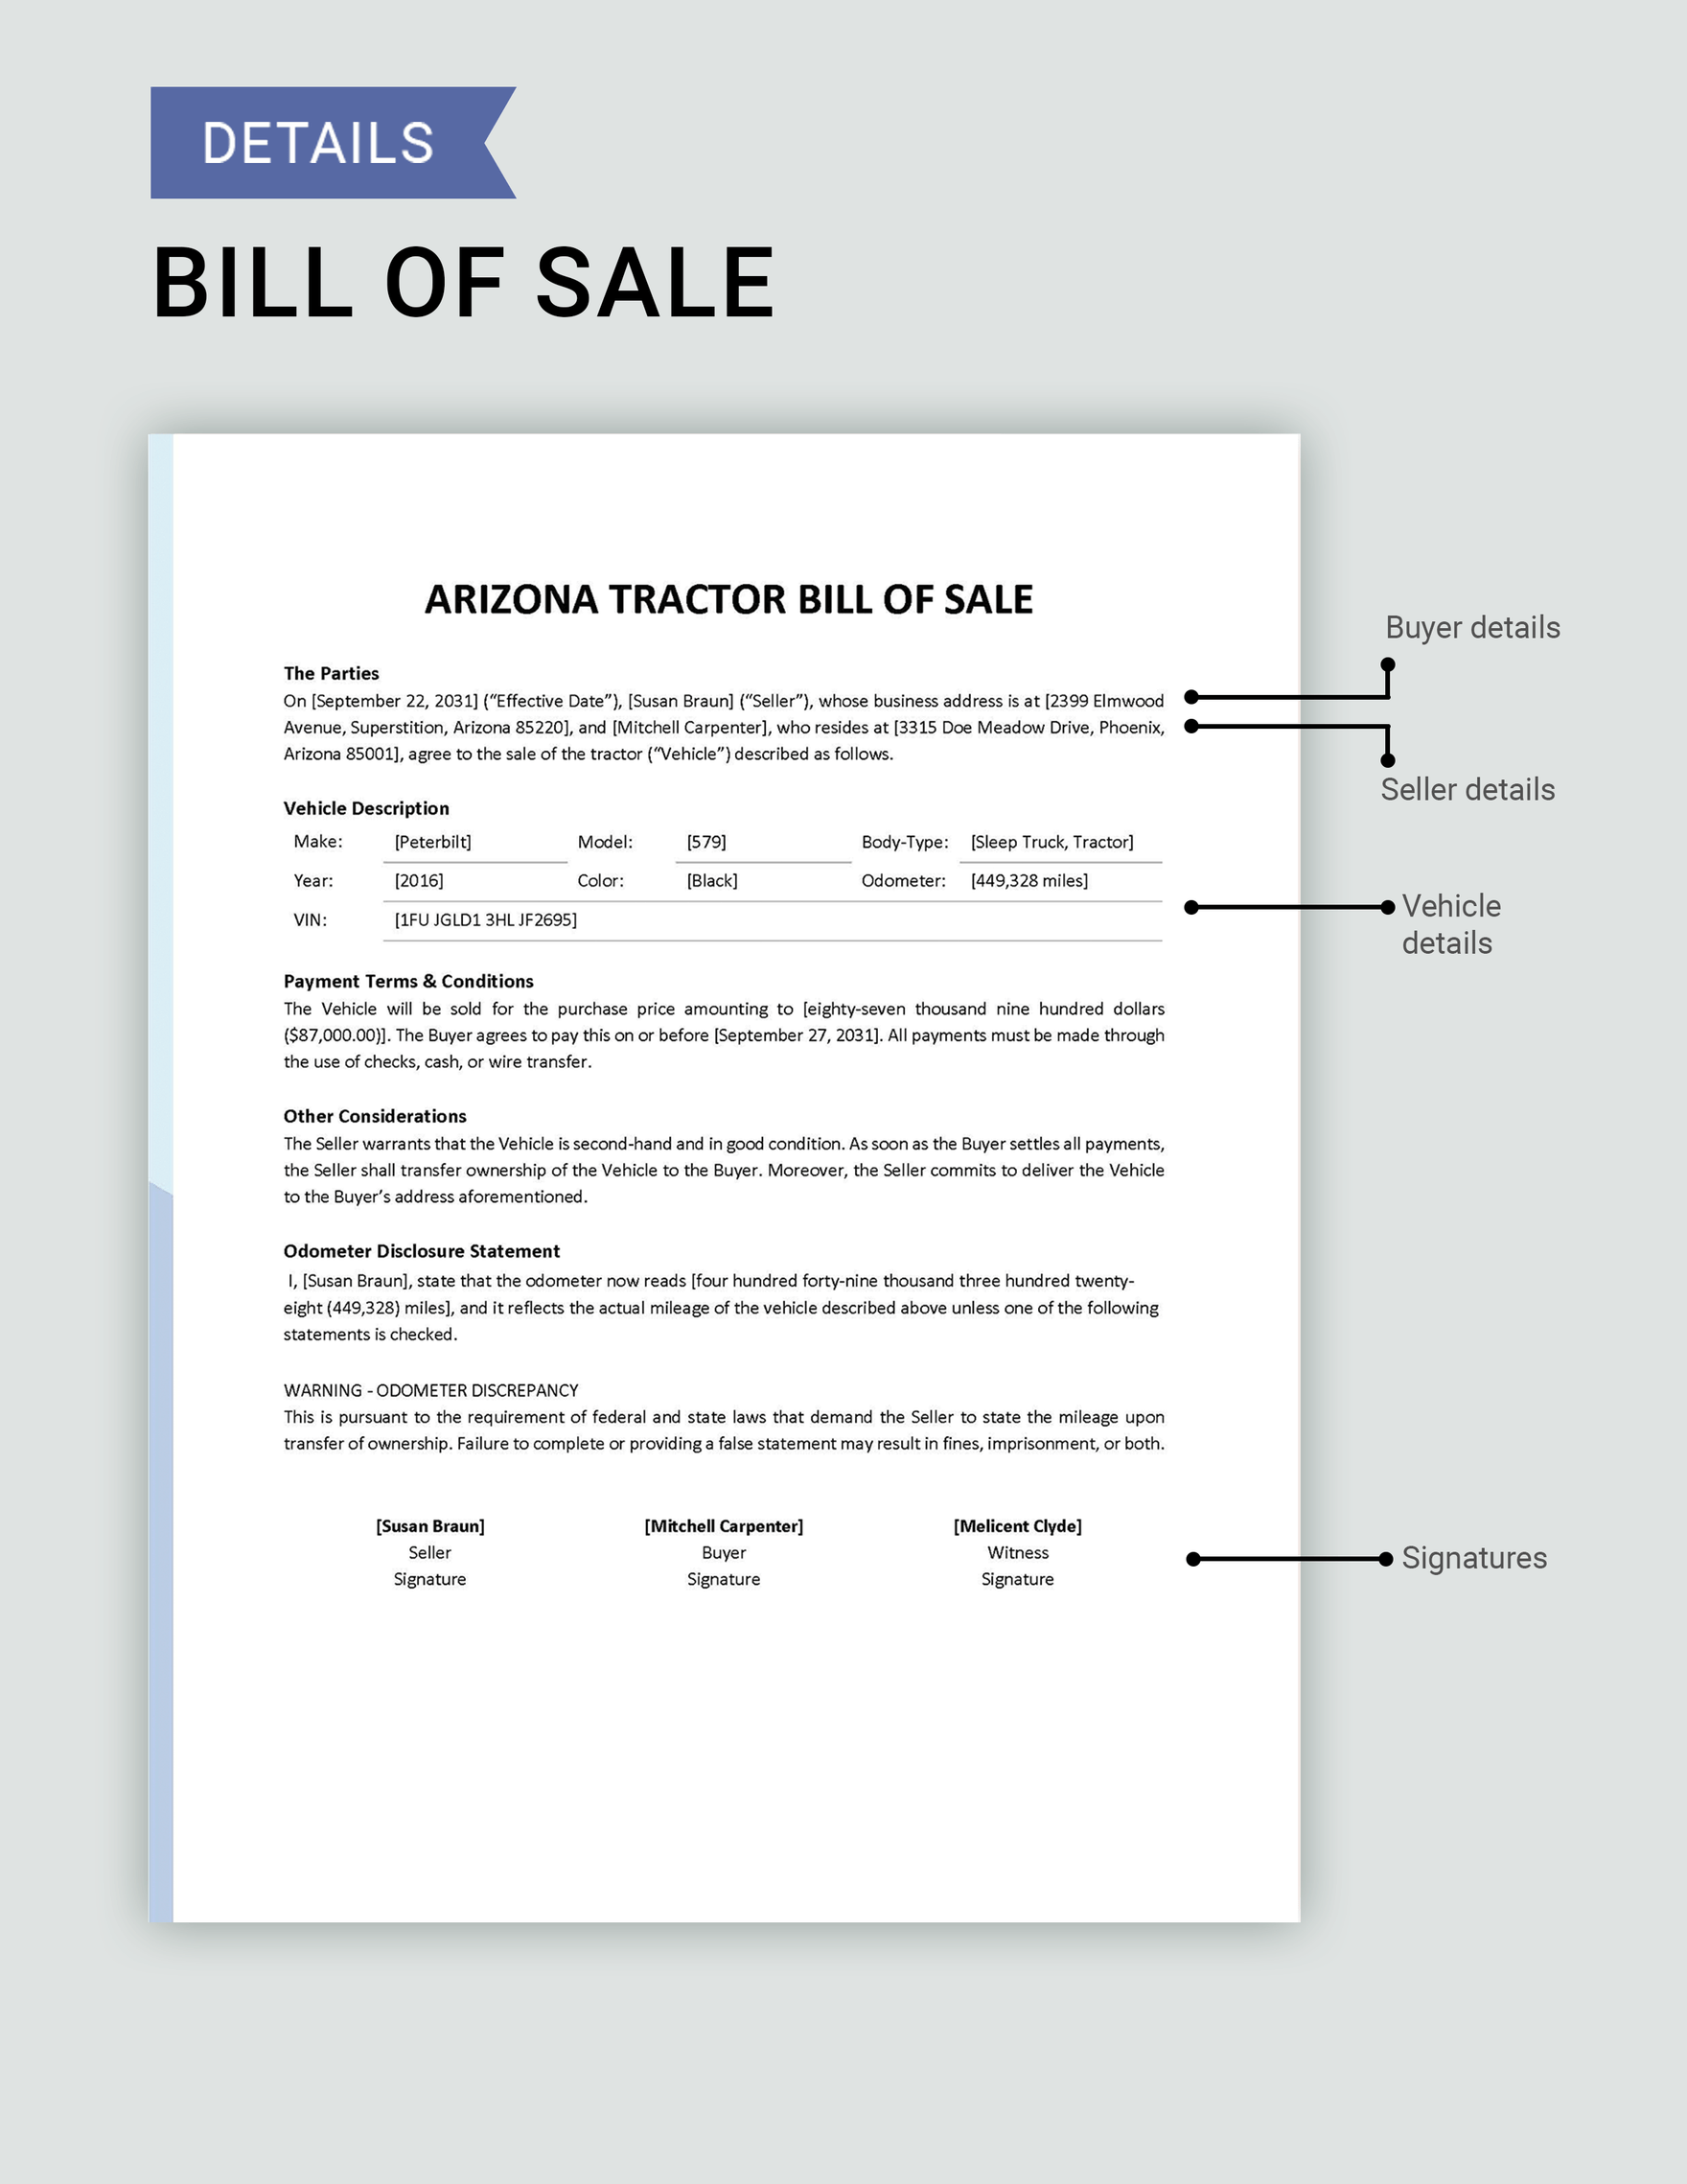 Arizona Tractor Bill of Sale Template